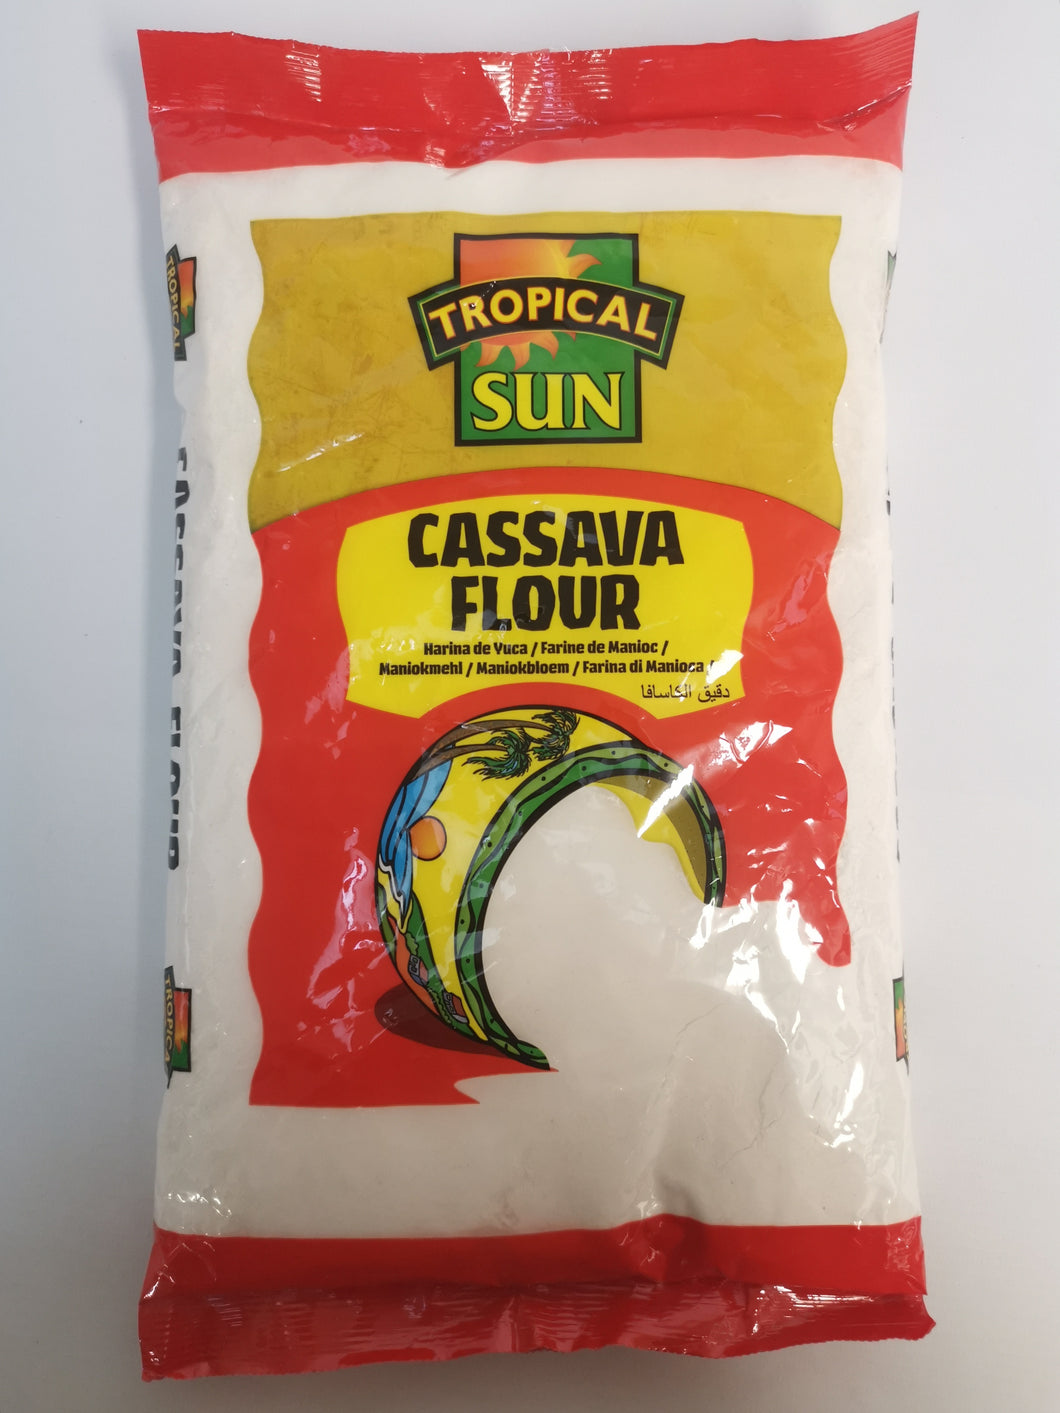 Tropical Sun Cassava Flour 1kg